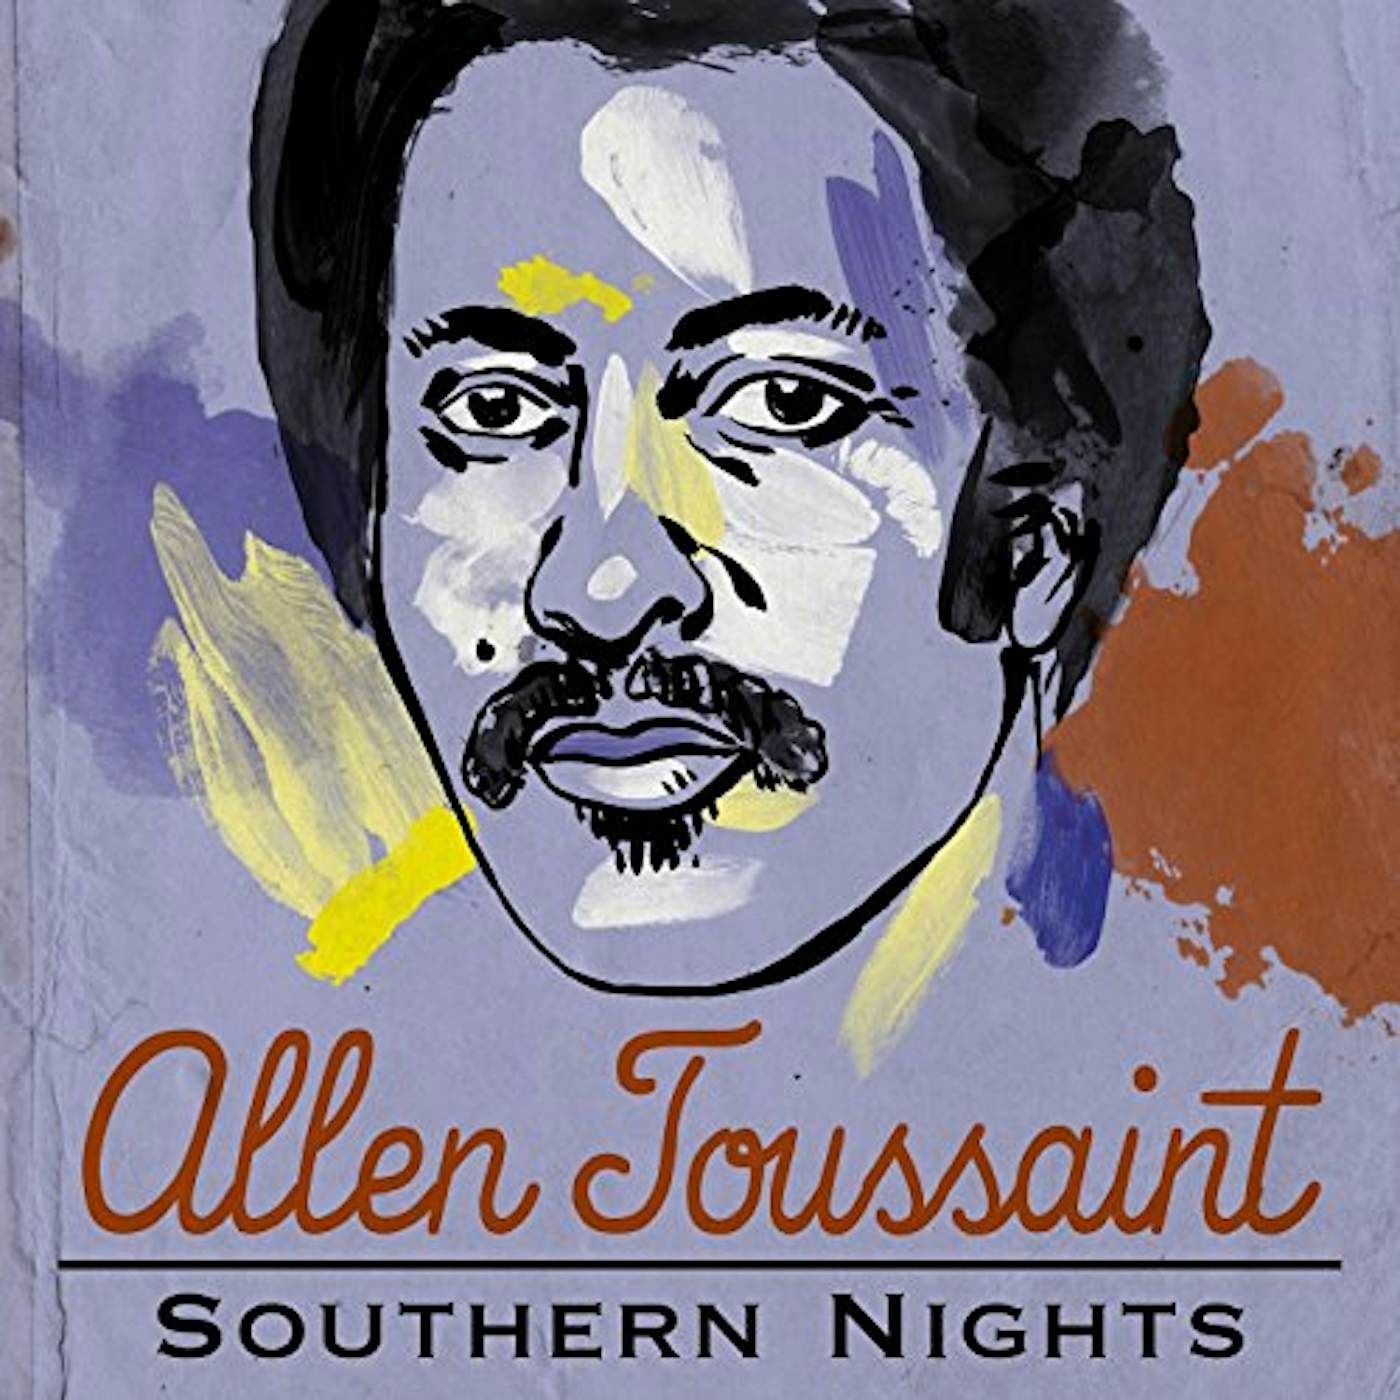 Allen Toussaint SOUTHER NIGHTS Vinyl Record